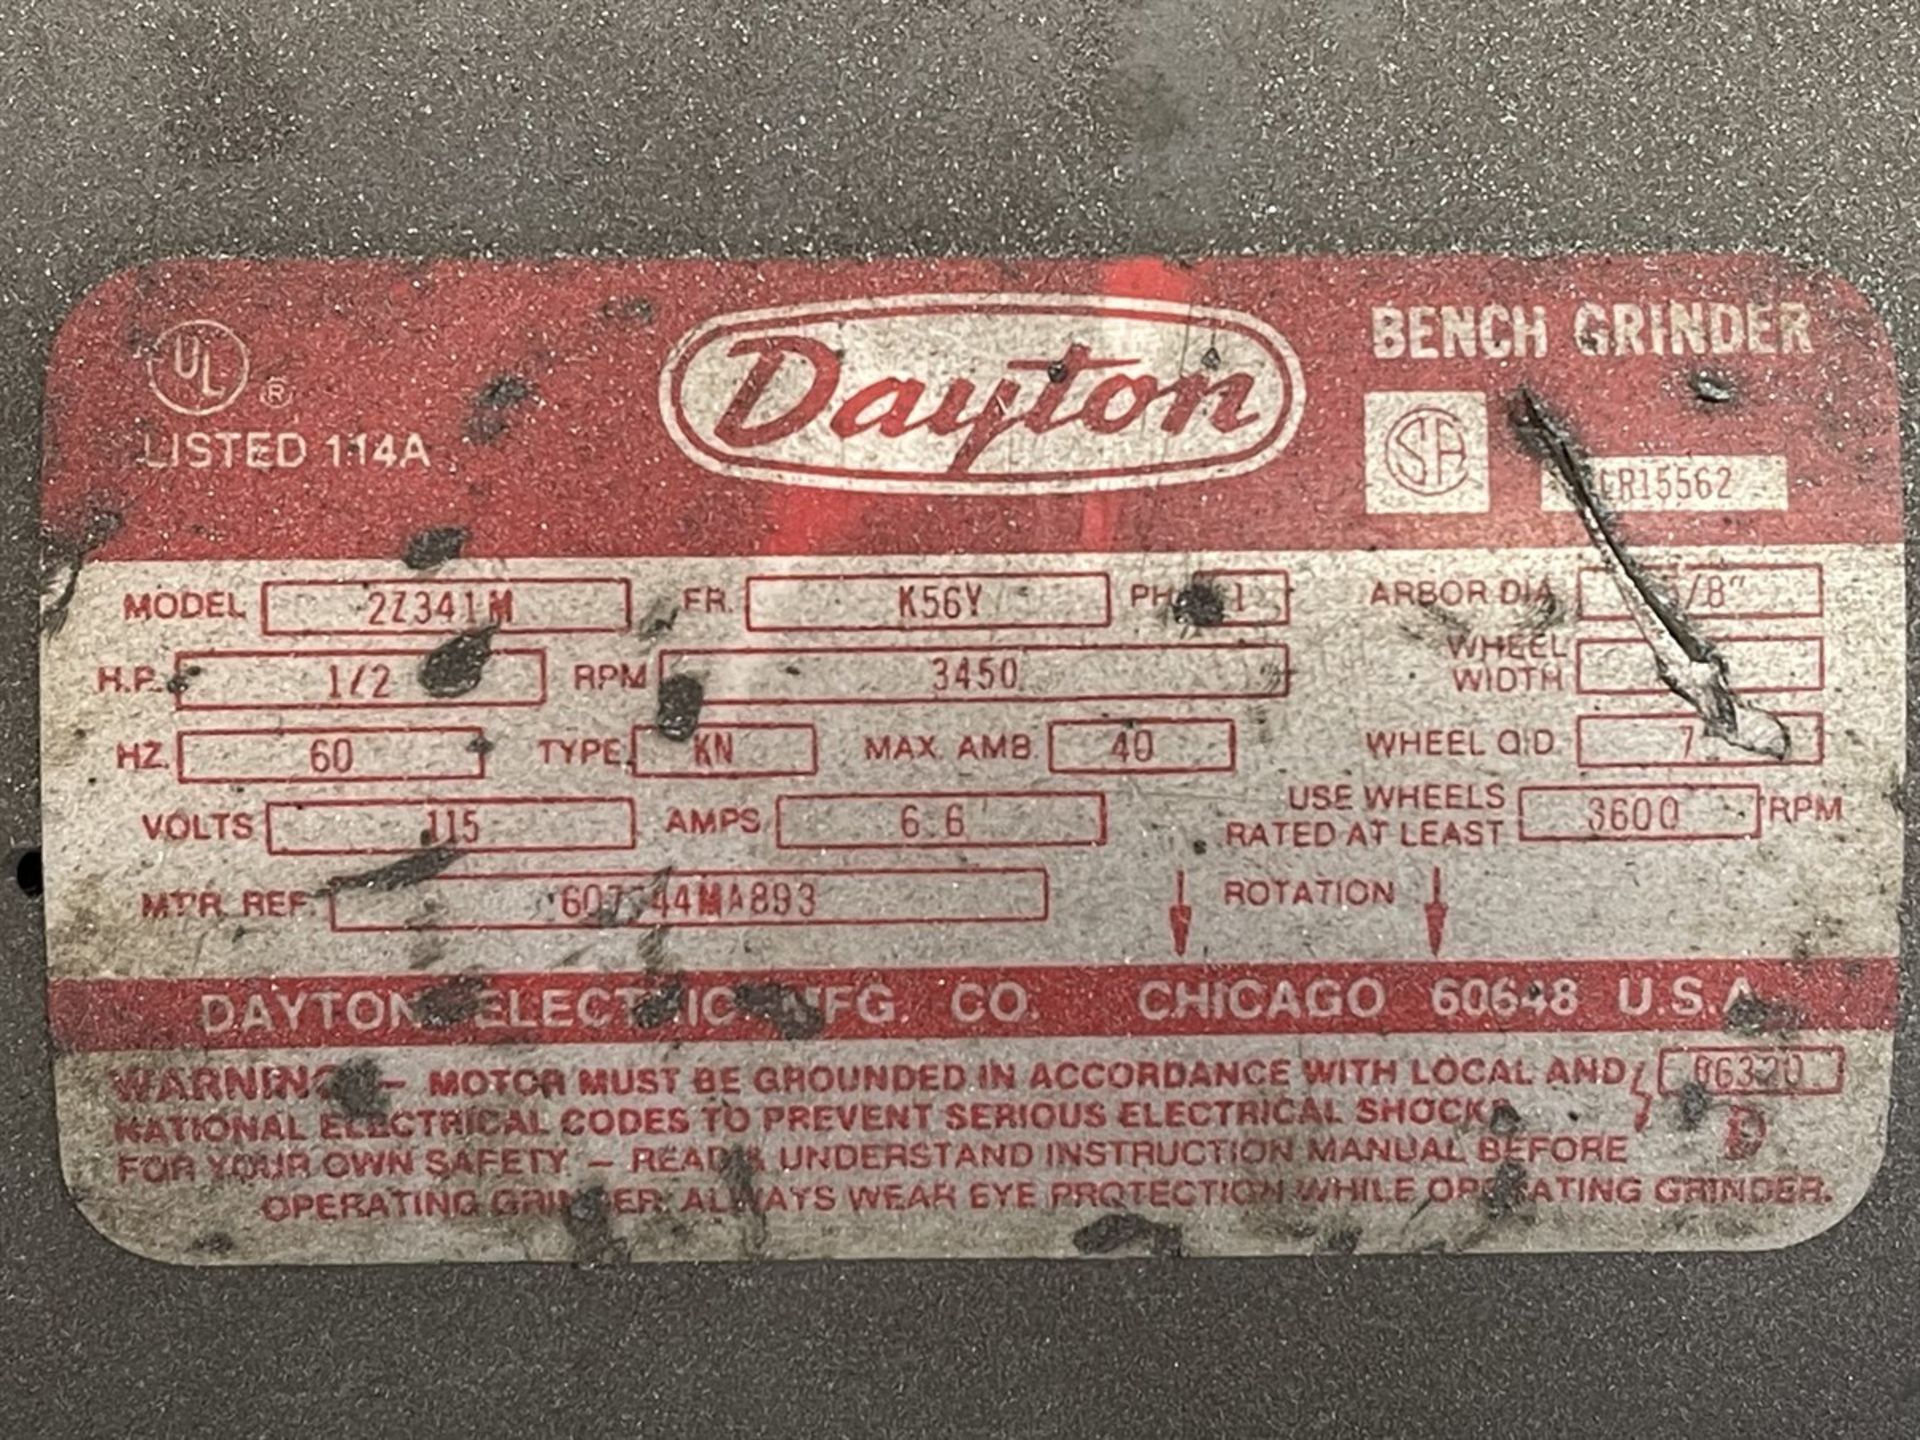 DAYTON 2Z341M 7' Bench Grinder - Image 4 of 4